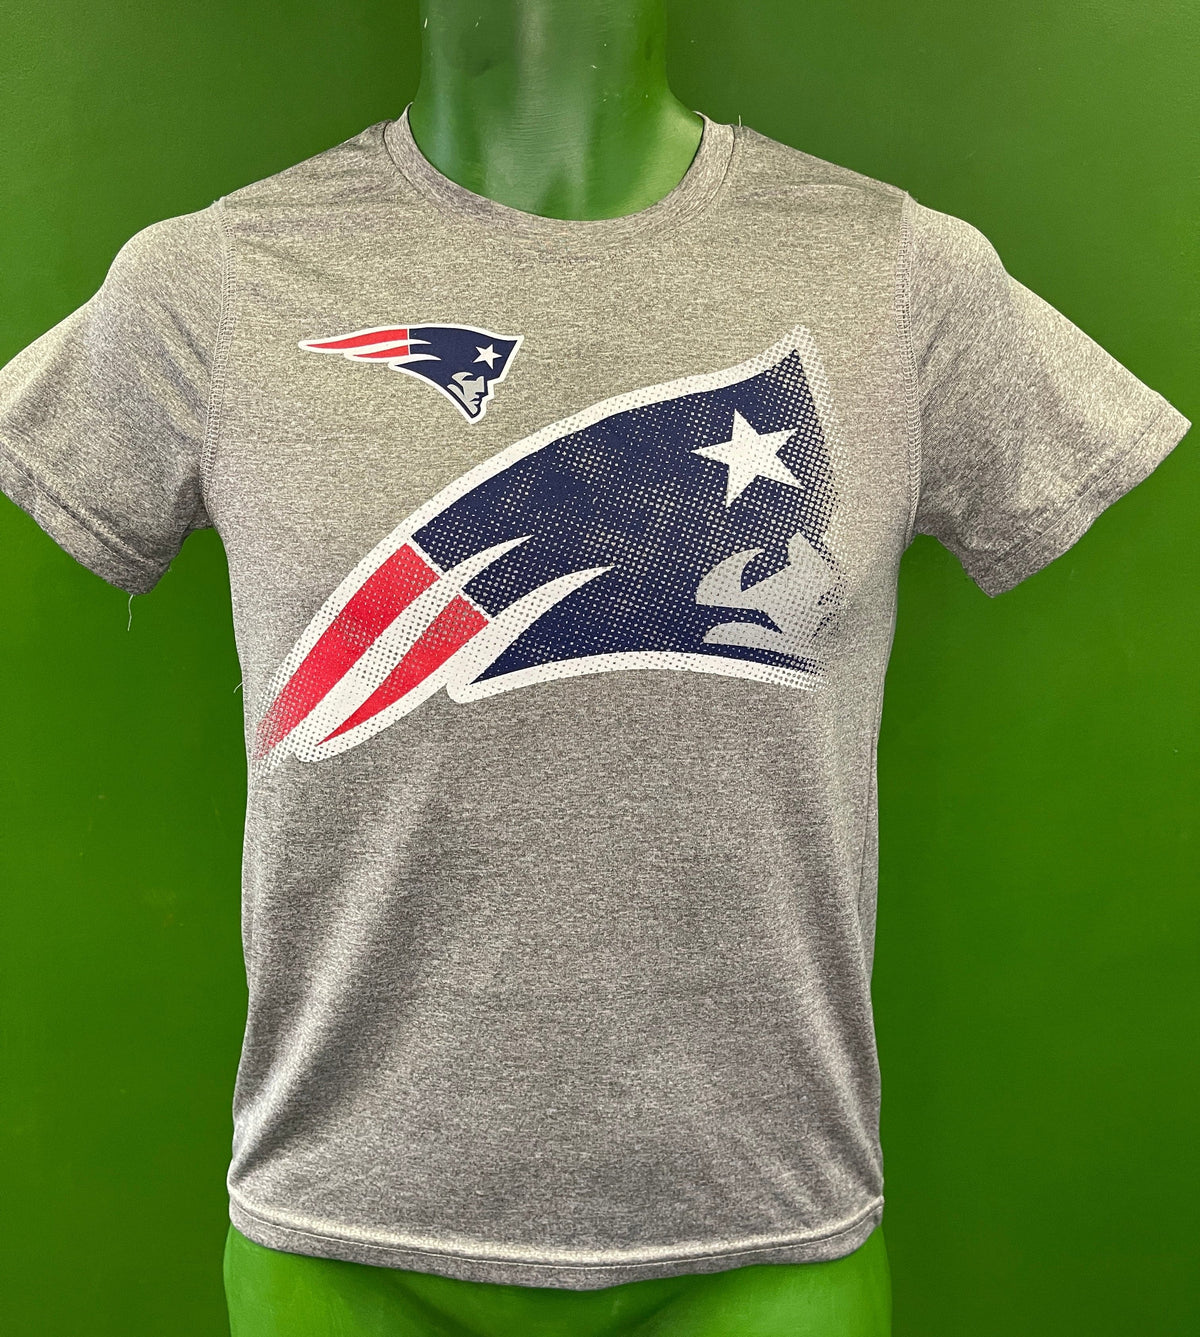 NFL New England Patriots Heathered Grey T-Shirt Youth Medium 10-12